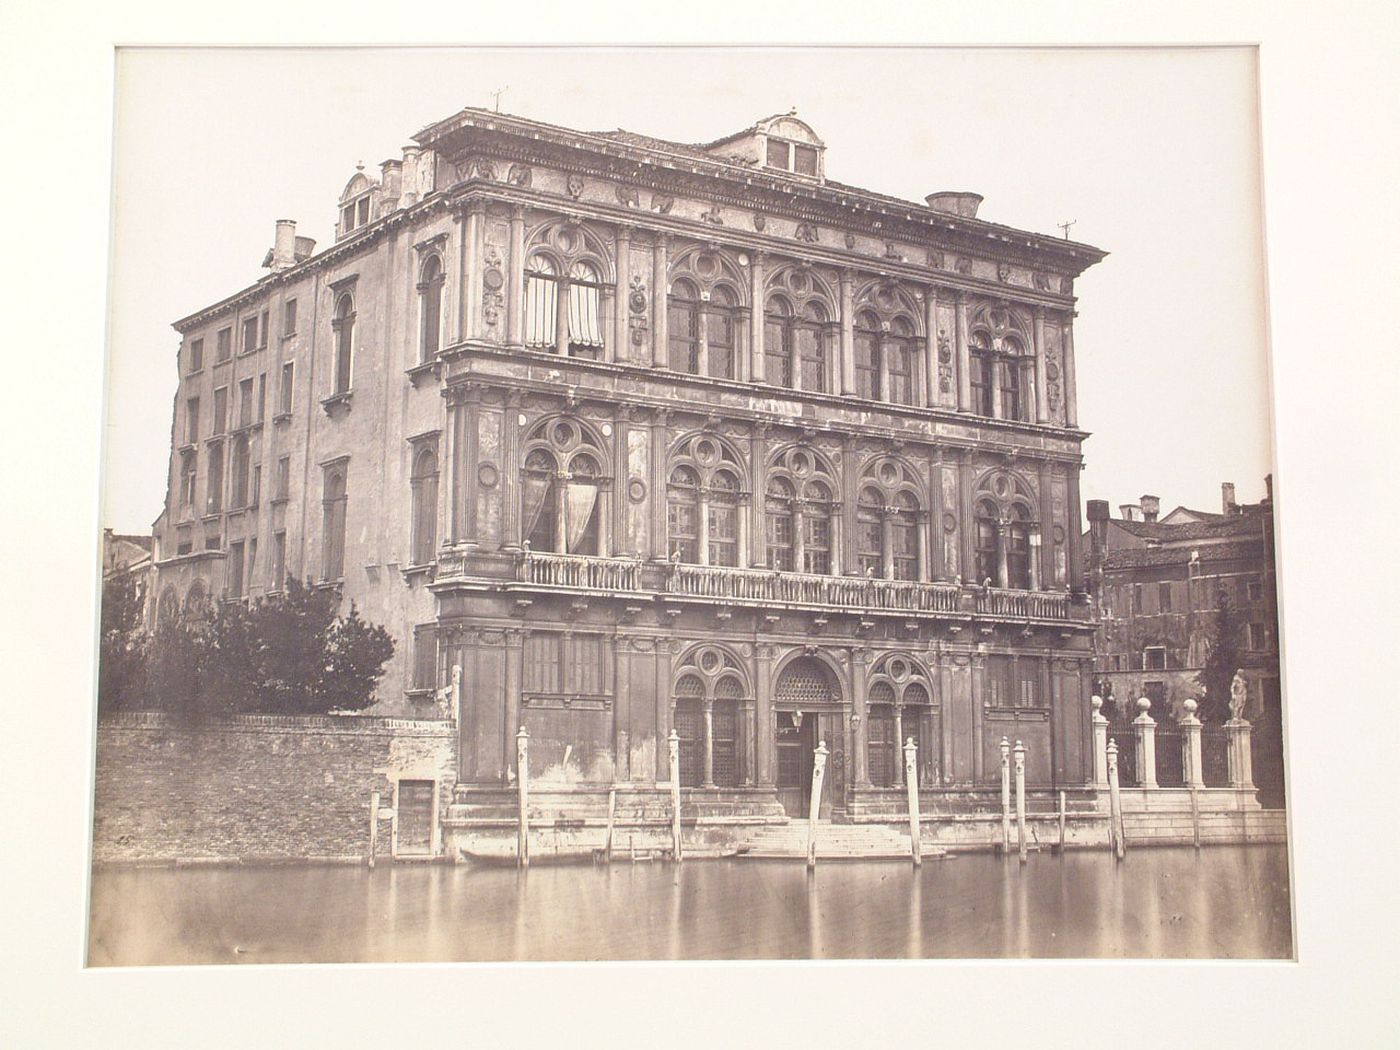 Unidentified palazzo, possibly Palazzo Vendramini, Venice, Italy